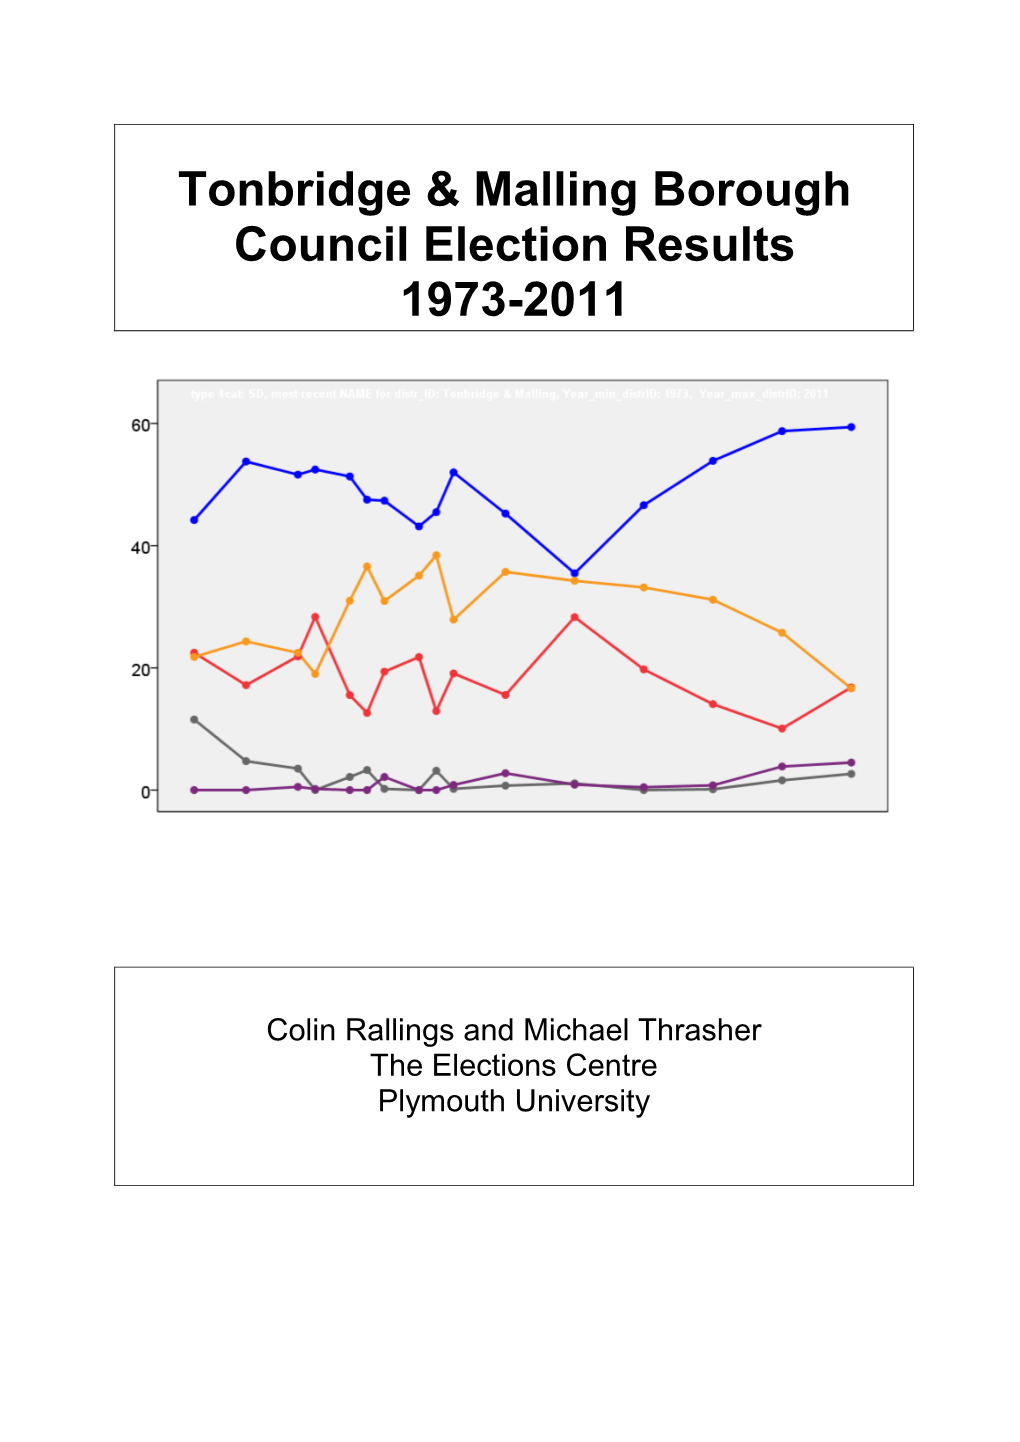 Tonbridge & Malling Borough Council Election Results 1973-2011